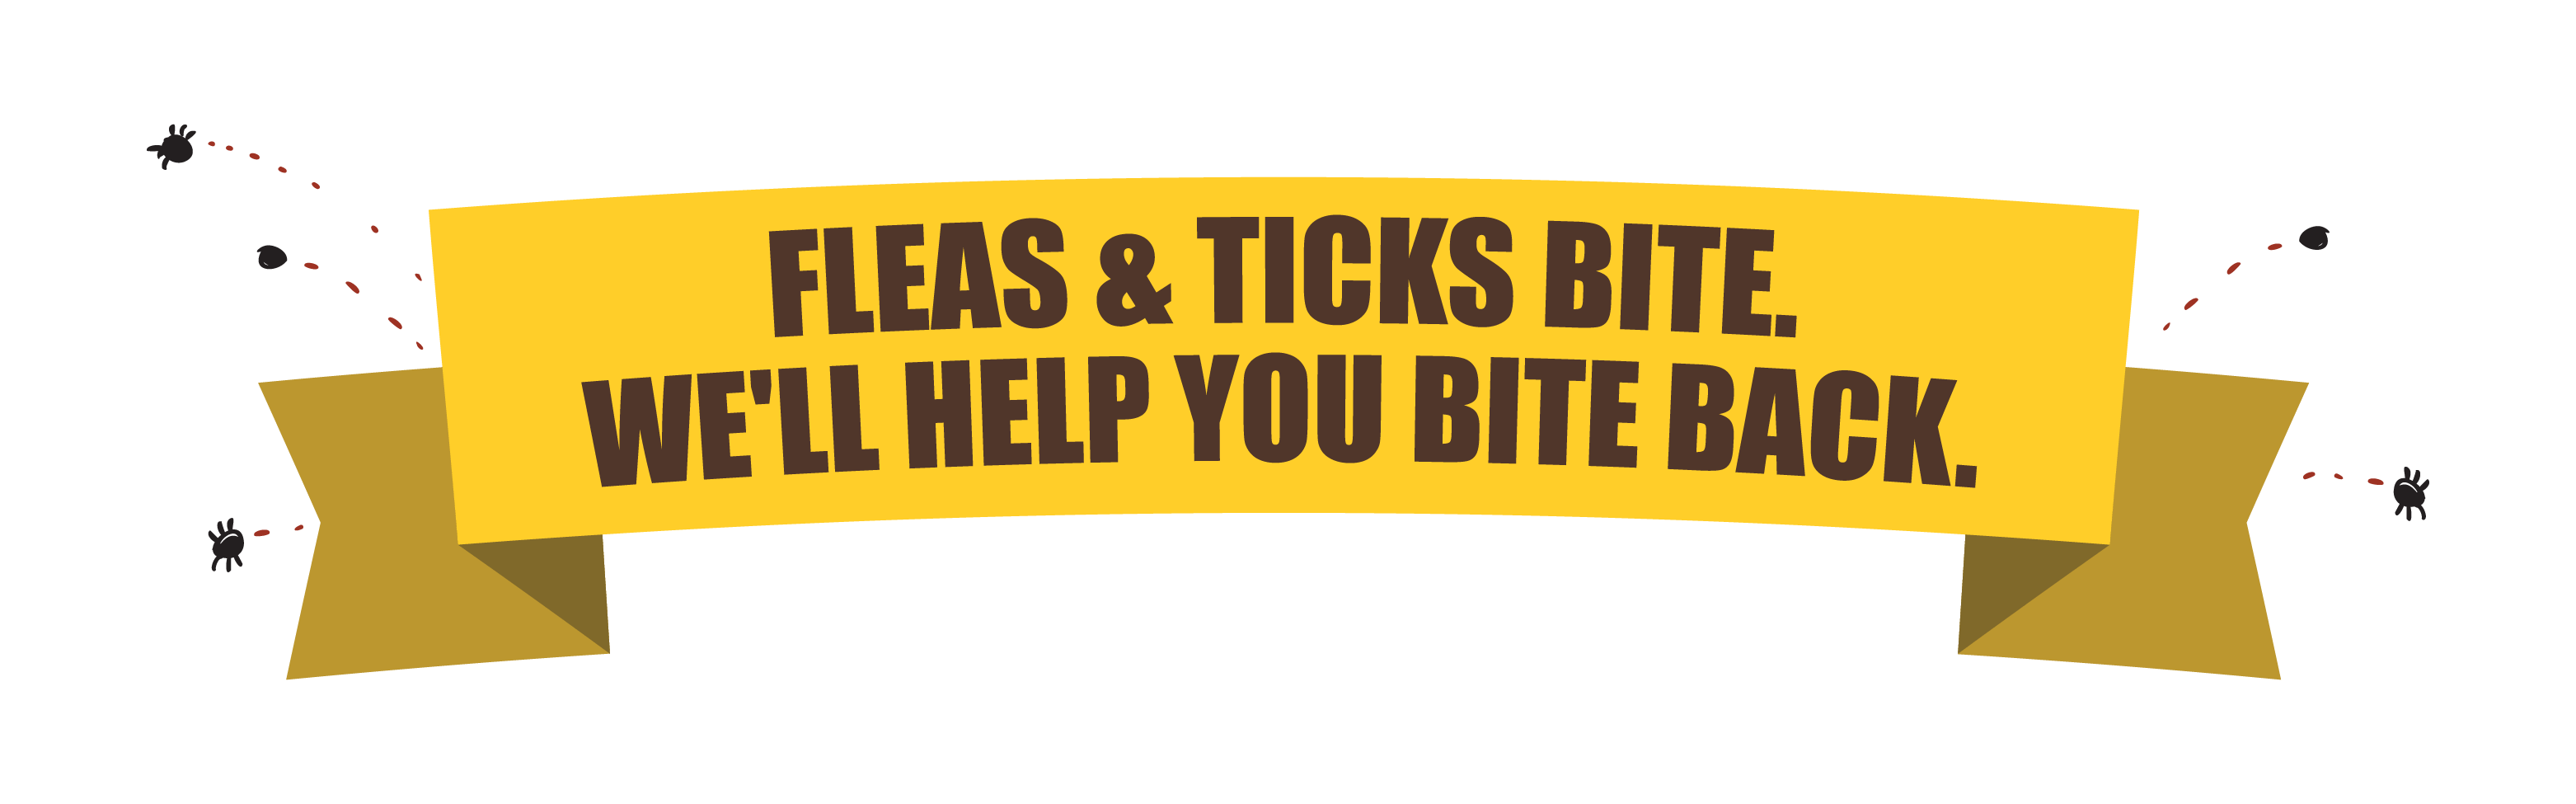 Banner - Fleas and ticks bite, we'll help you bite back.